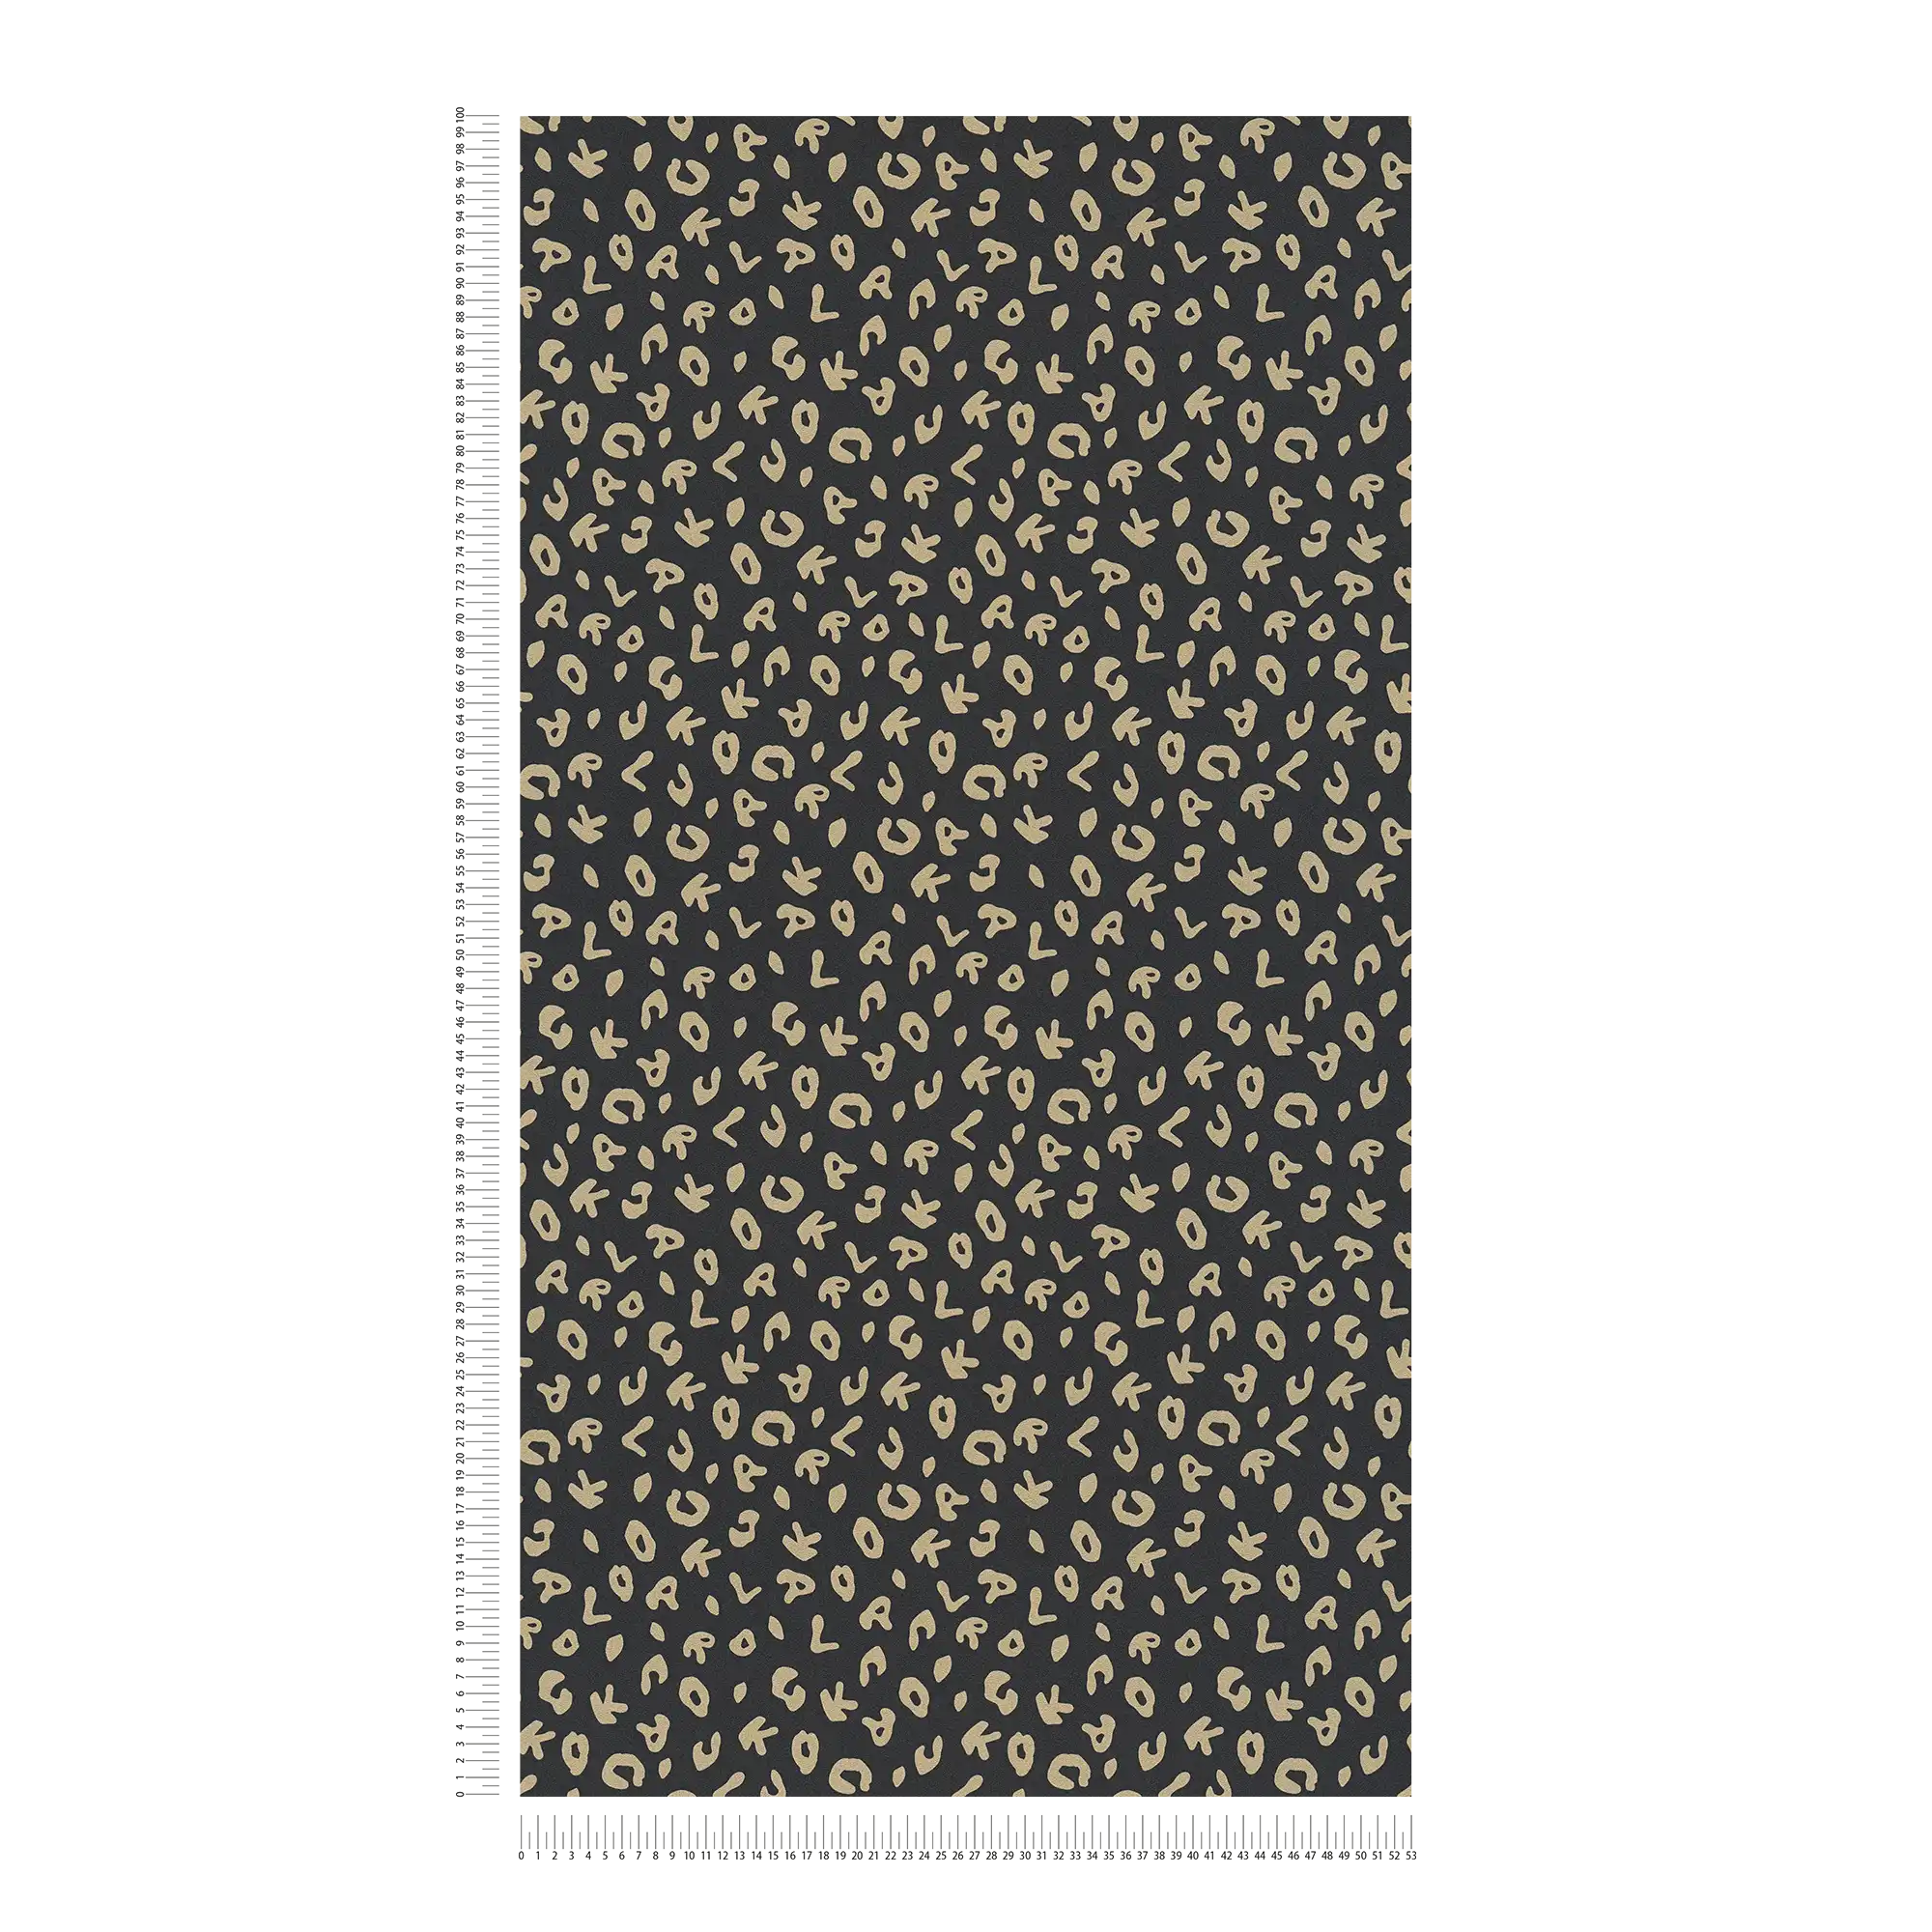             Karl LAGERFELD Tapete Gold Leoparden Print – Metallic, Schwarz
        